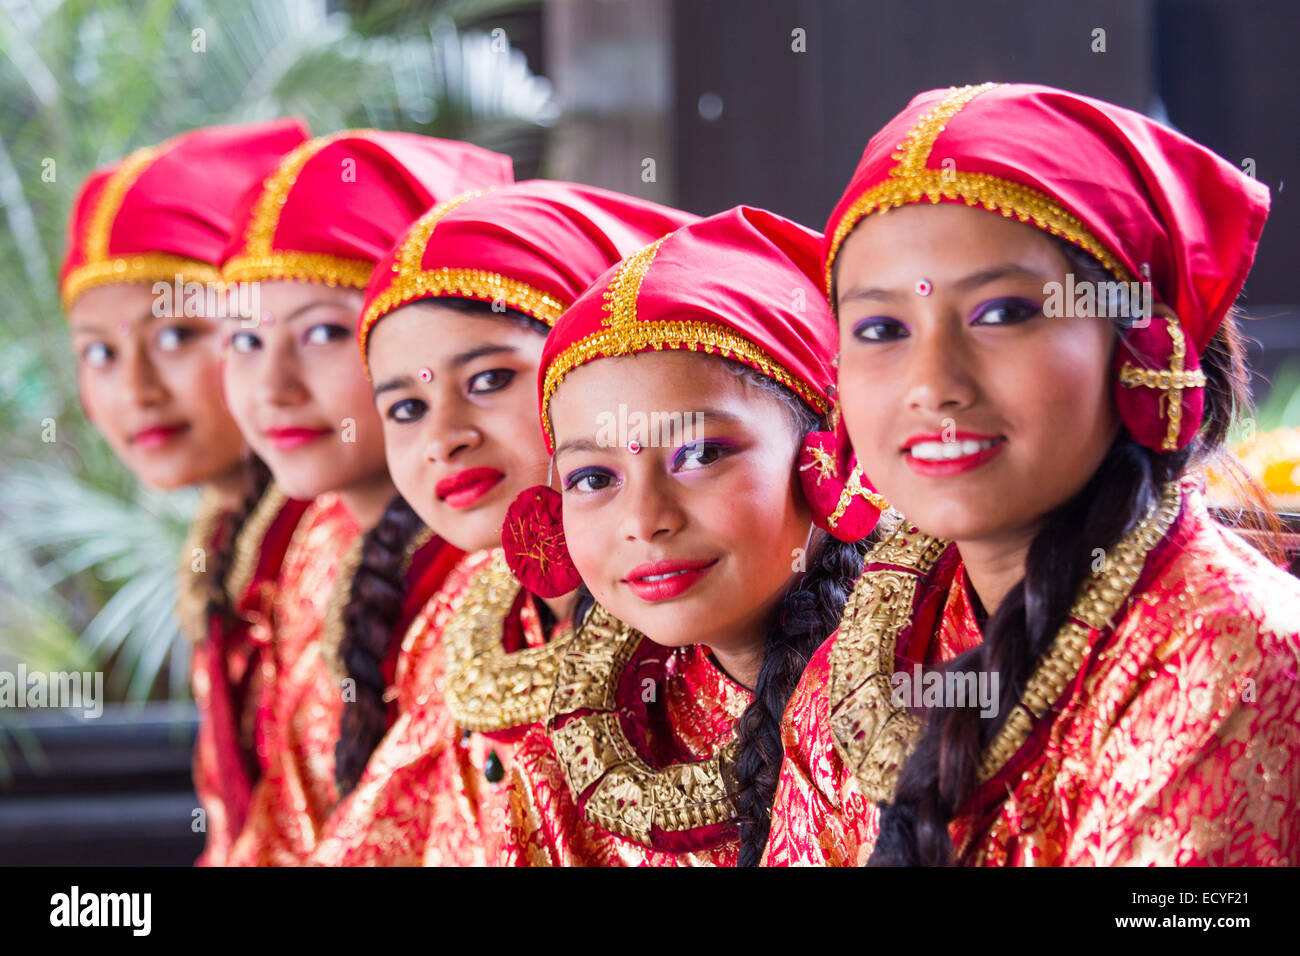 Girls dressed in traditional clothing in Kathmandu, Nepal Stock Photo